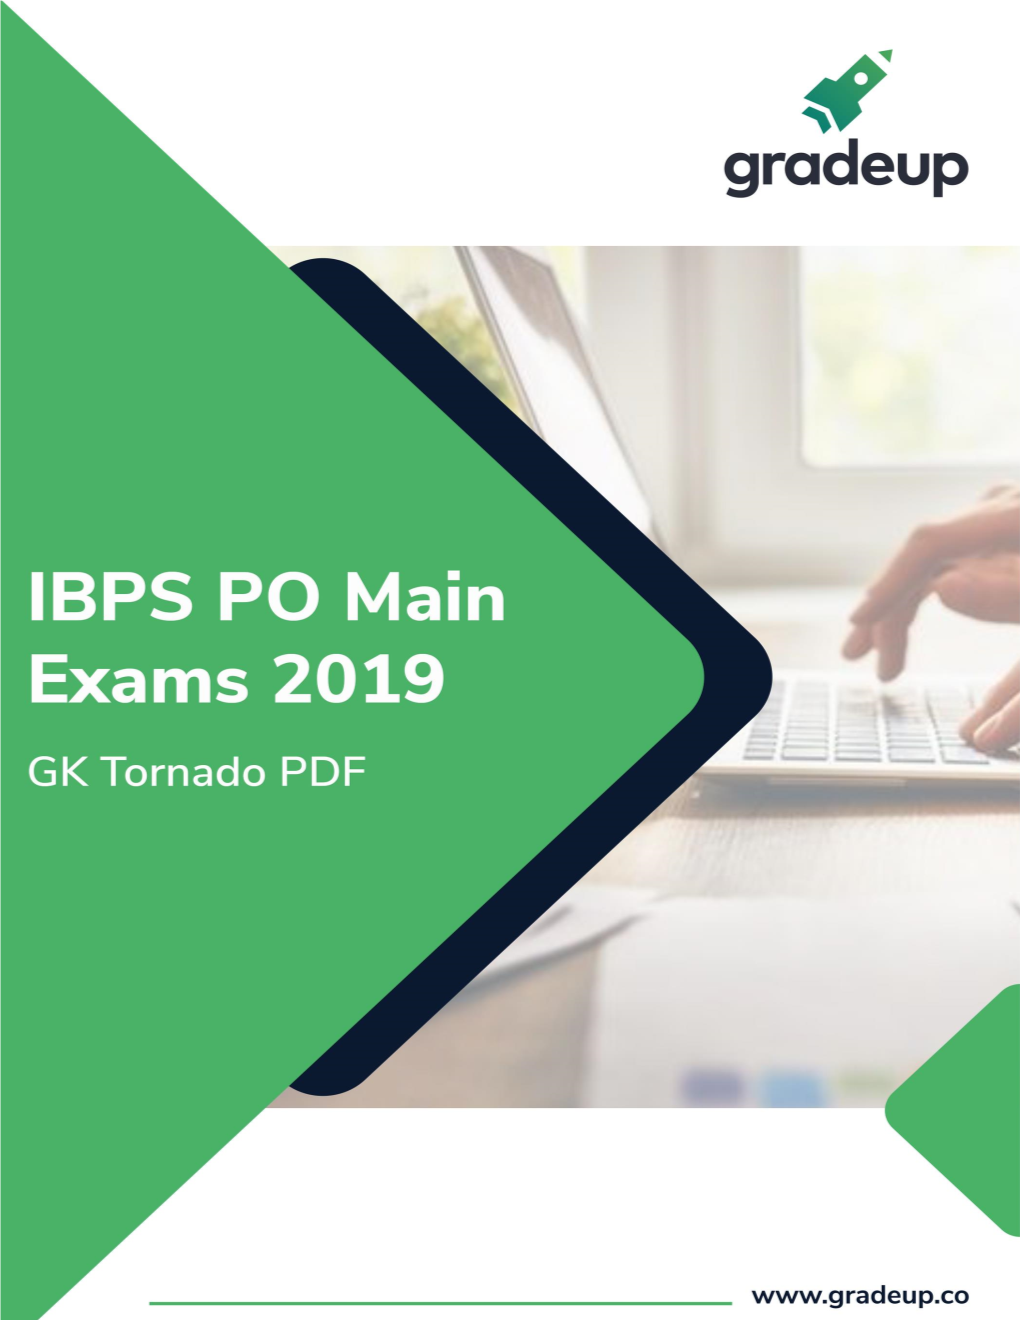 GK Tornado for IBPS PO Main Exams 2019